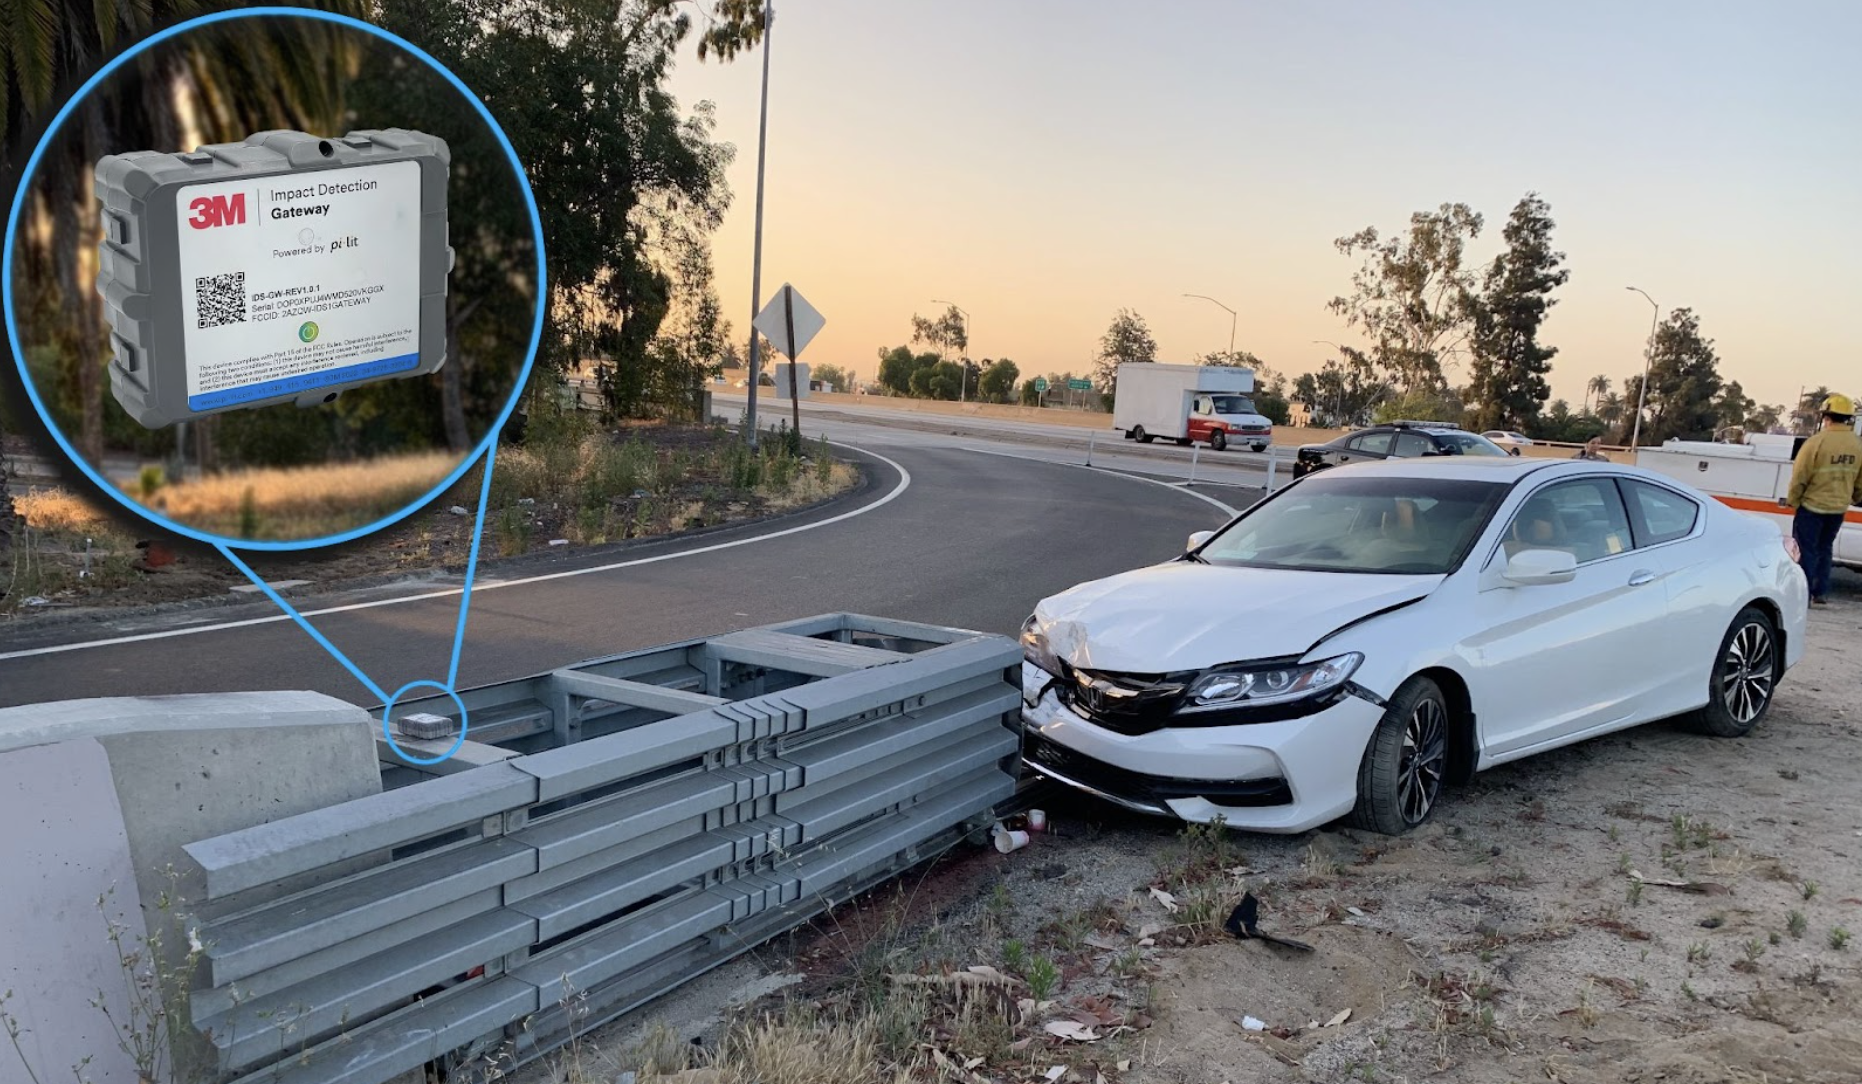 pi lit impact detection system car crashed into guardrail